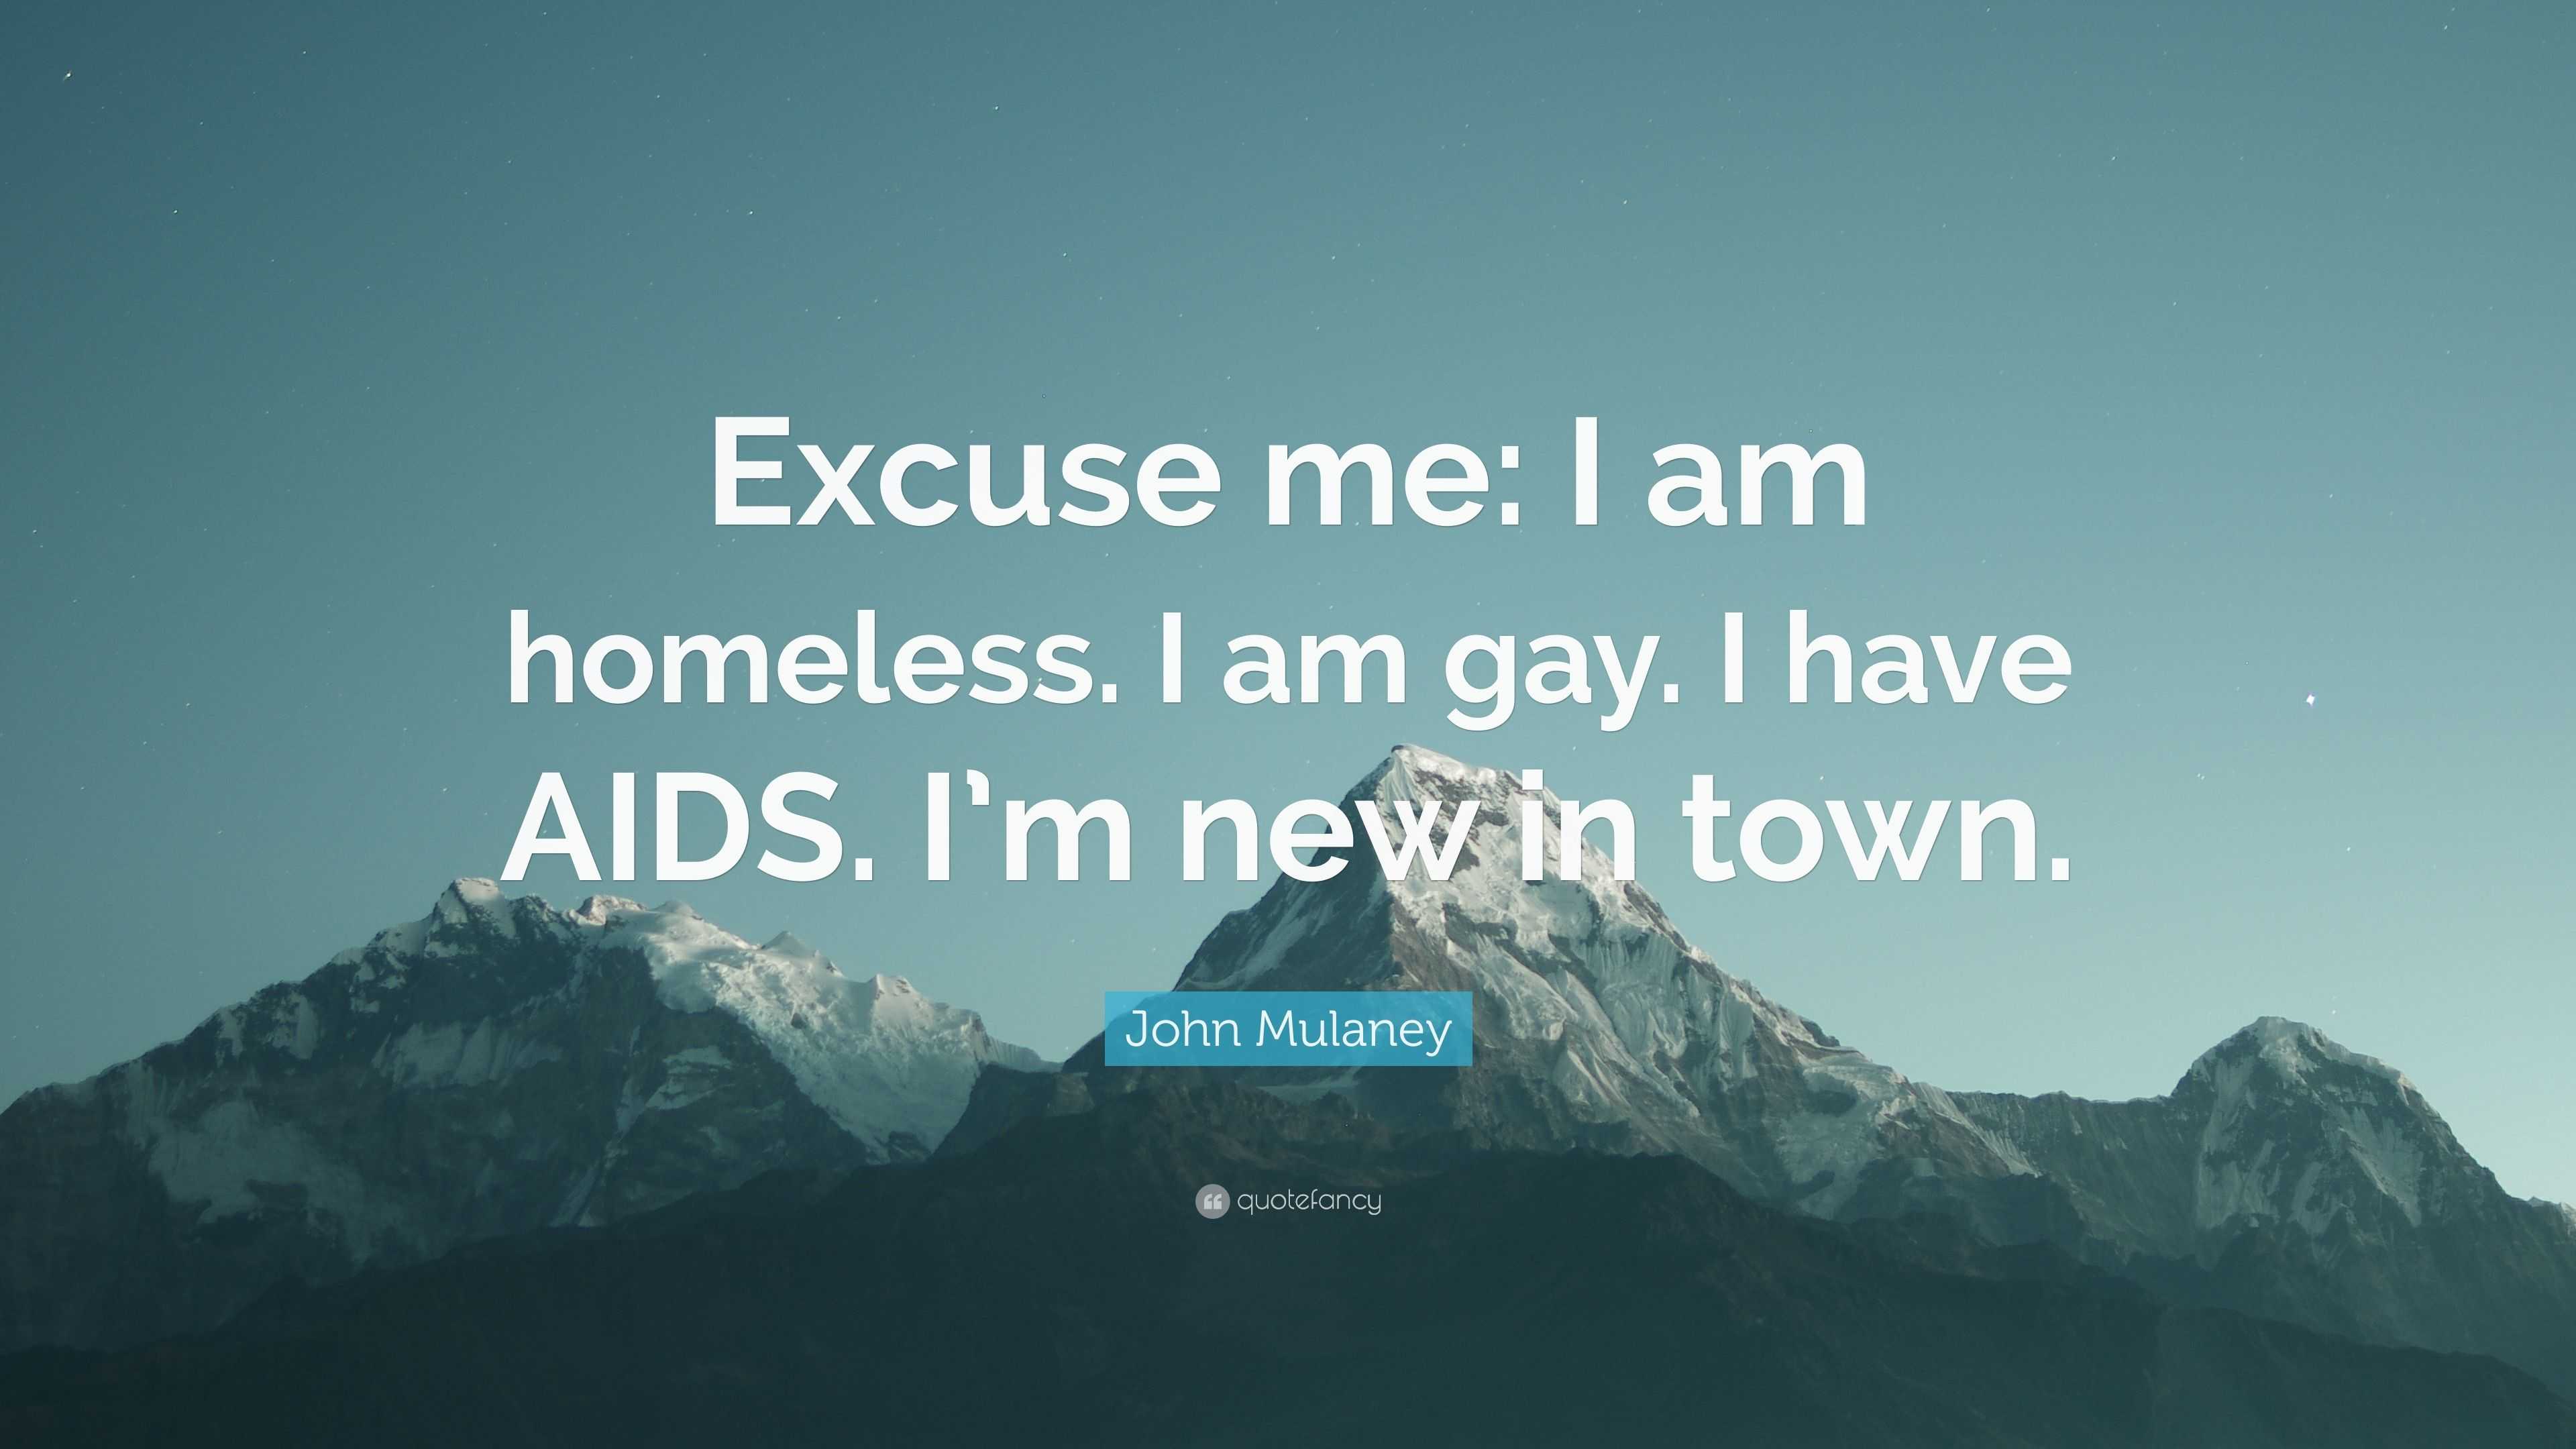 John Mulaney Quote “Excuse me I am homeless. I am gay. I have AIDS. I